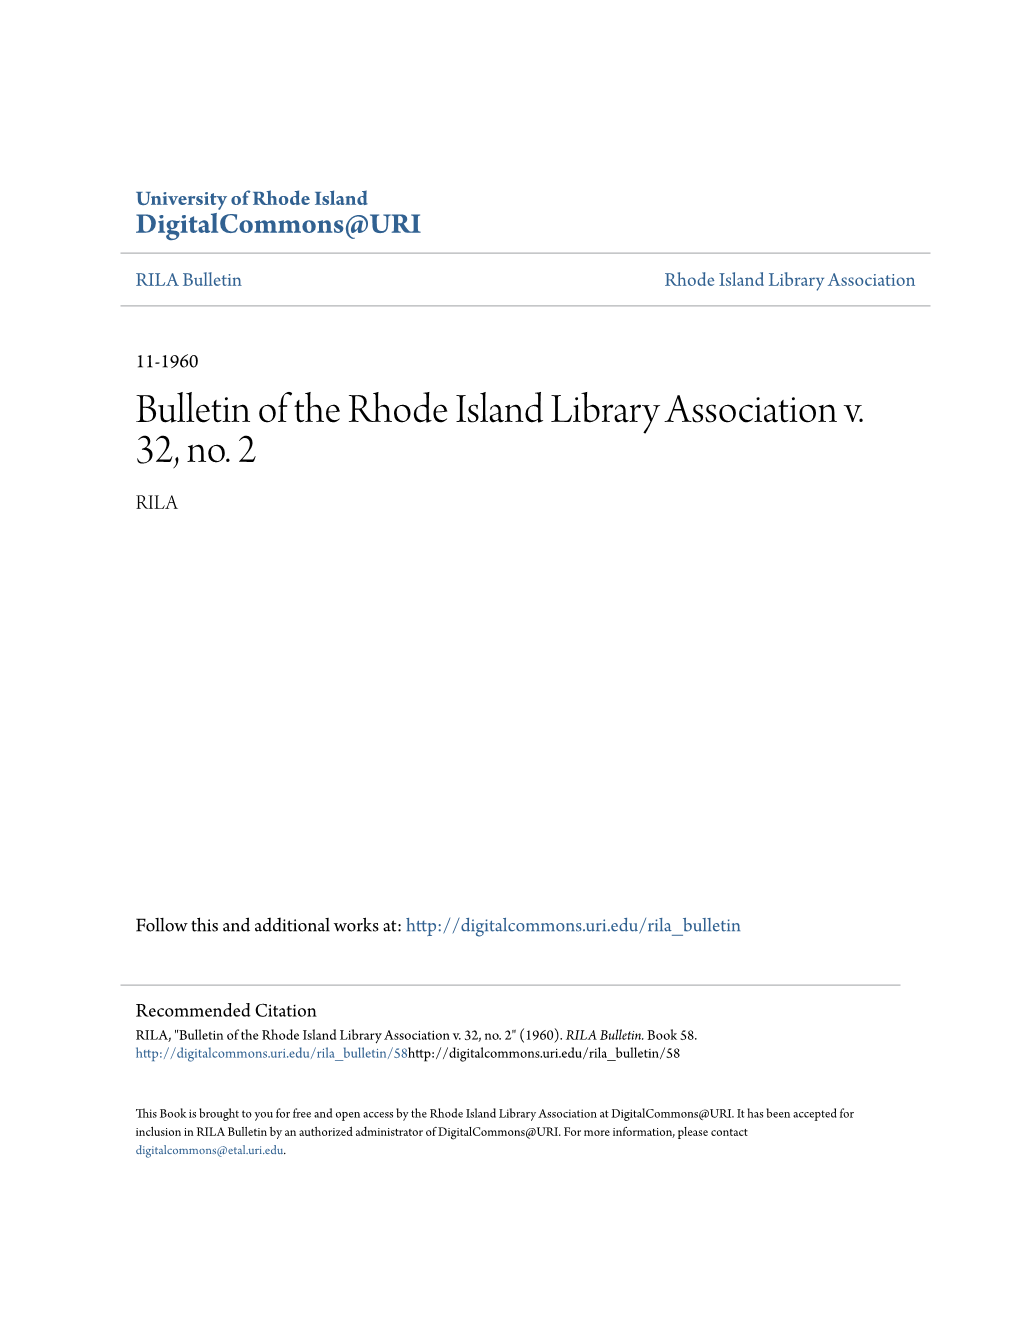 Bulletin of the Rhode Island Library Association V. 32, No. 2 RILA